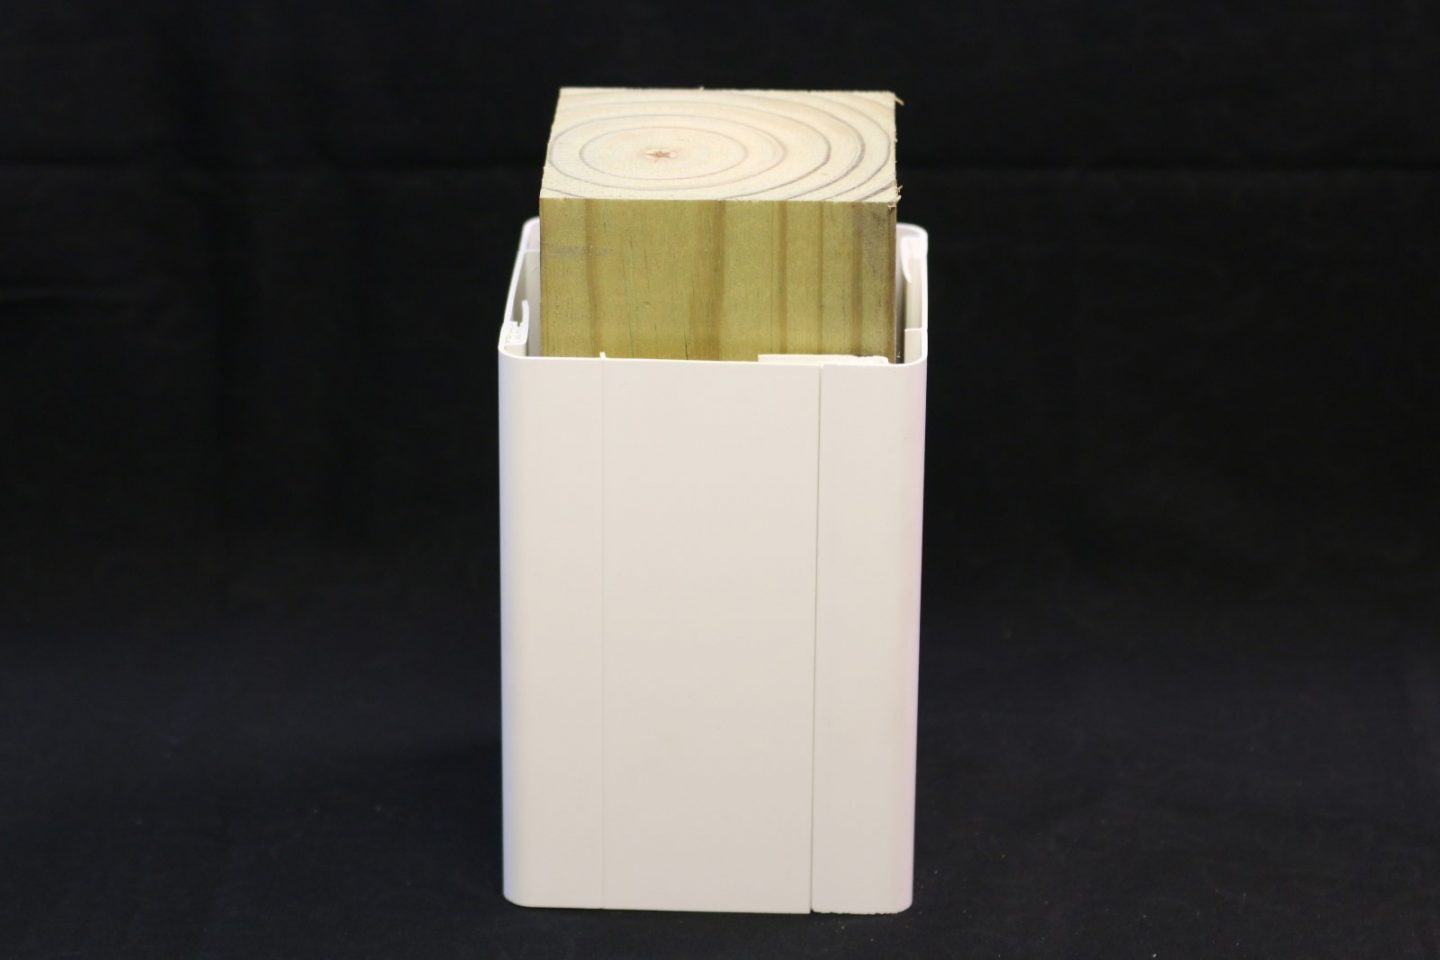 4x4x96” 4 piece Vinyl Post Wrap (Fits an existing 4x4 Wood